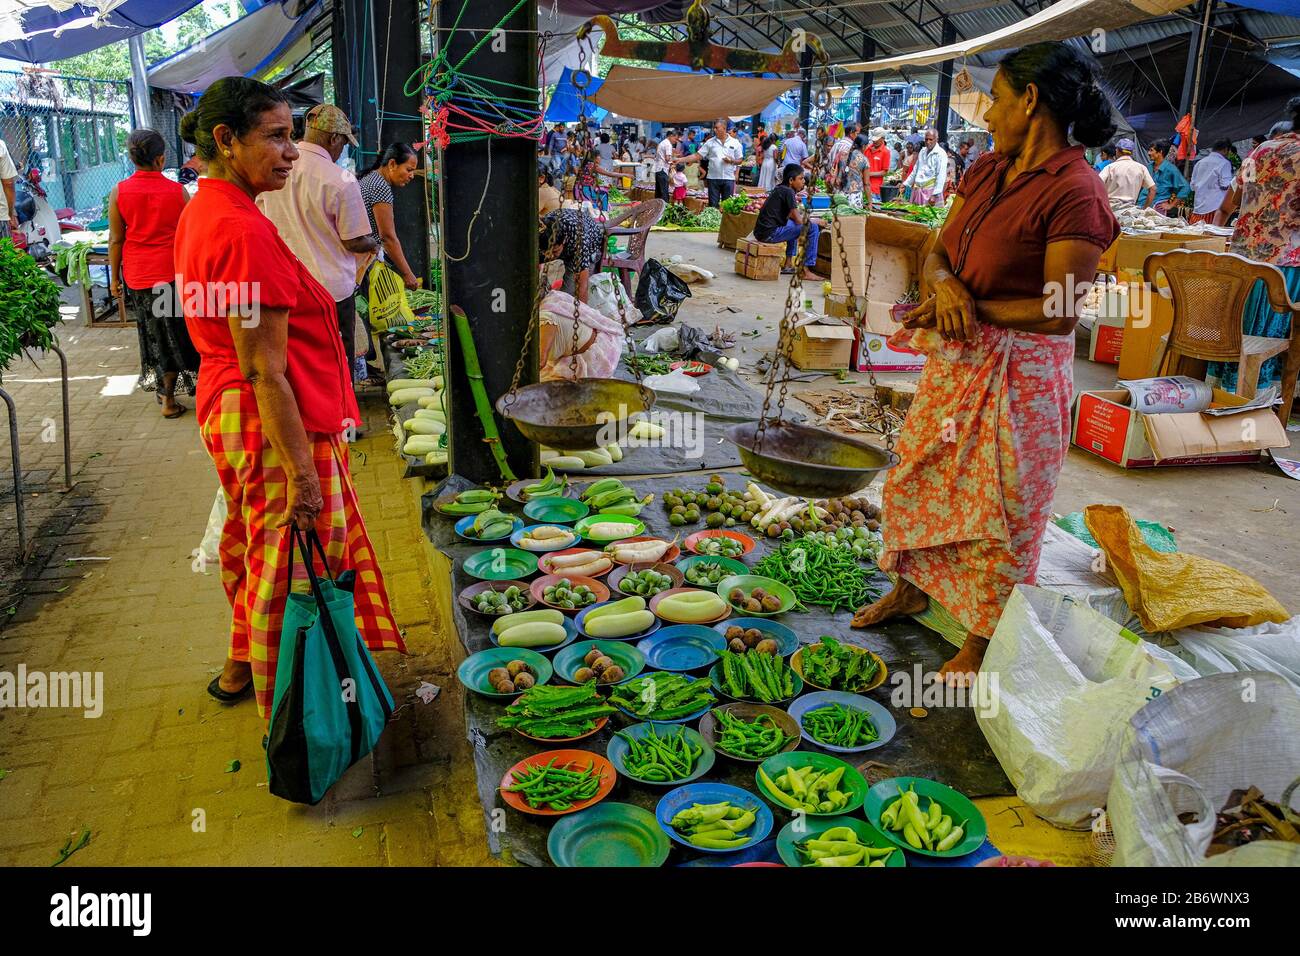 Polonnaruwa, Sri Lanka - February 2020: A woman selling vegetables in the Polonnaruwa market on February 11, 2020 in Polonnaruwa, Sri Lanka. Stock Photo